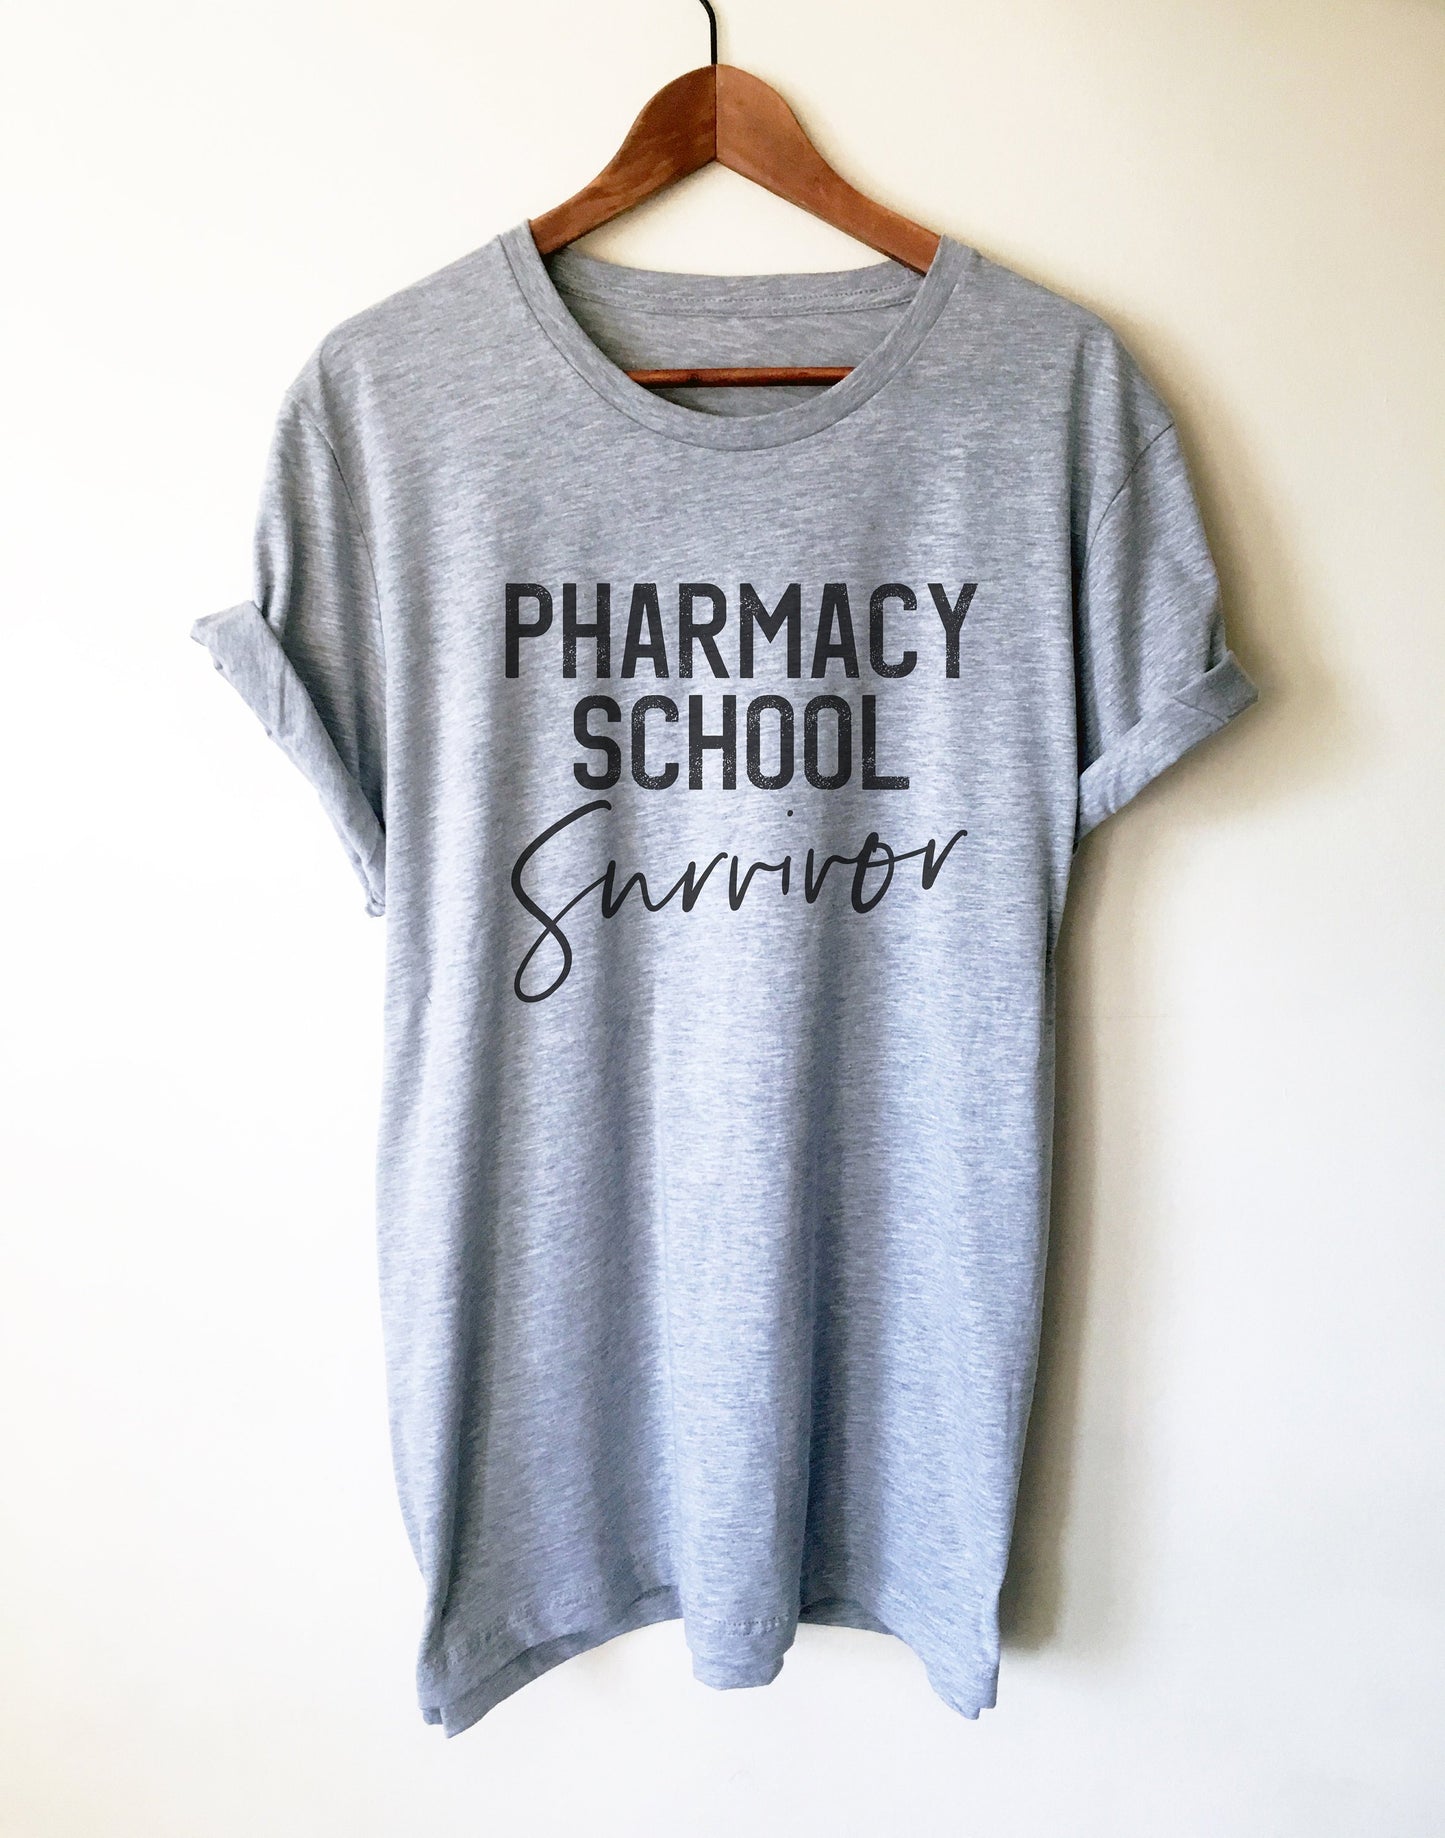 Pharmacy School Survivor Unisex Shirt- Pharmacist Shirt, Pharmacist Gift, Pharmacy Shirt, Pharmacist Assistant, Pharmacy School